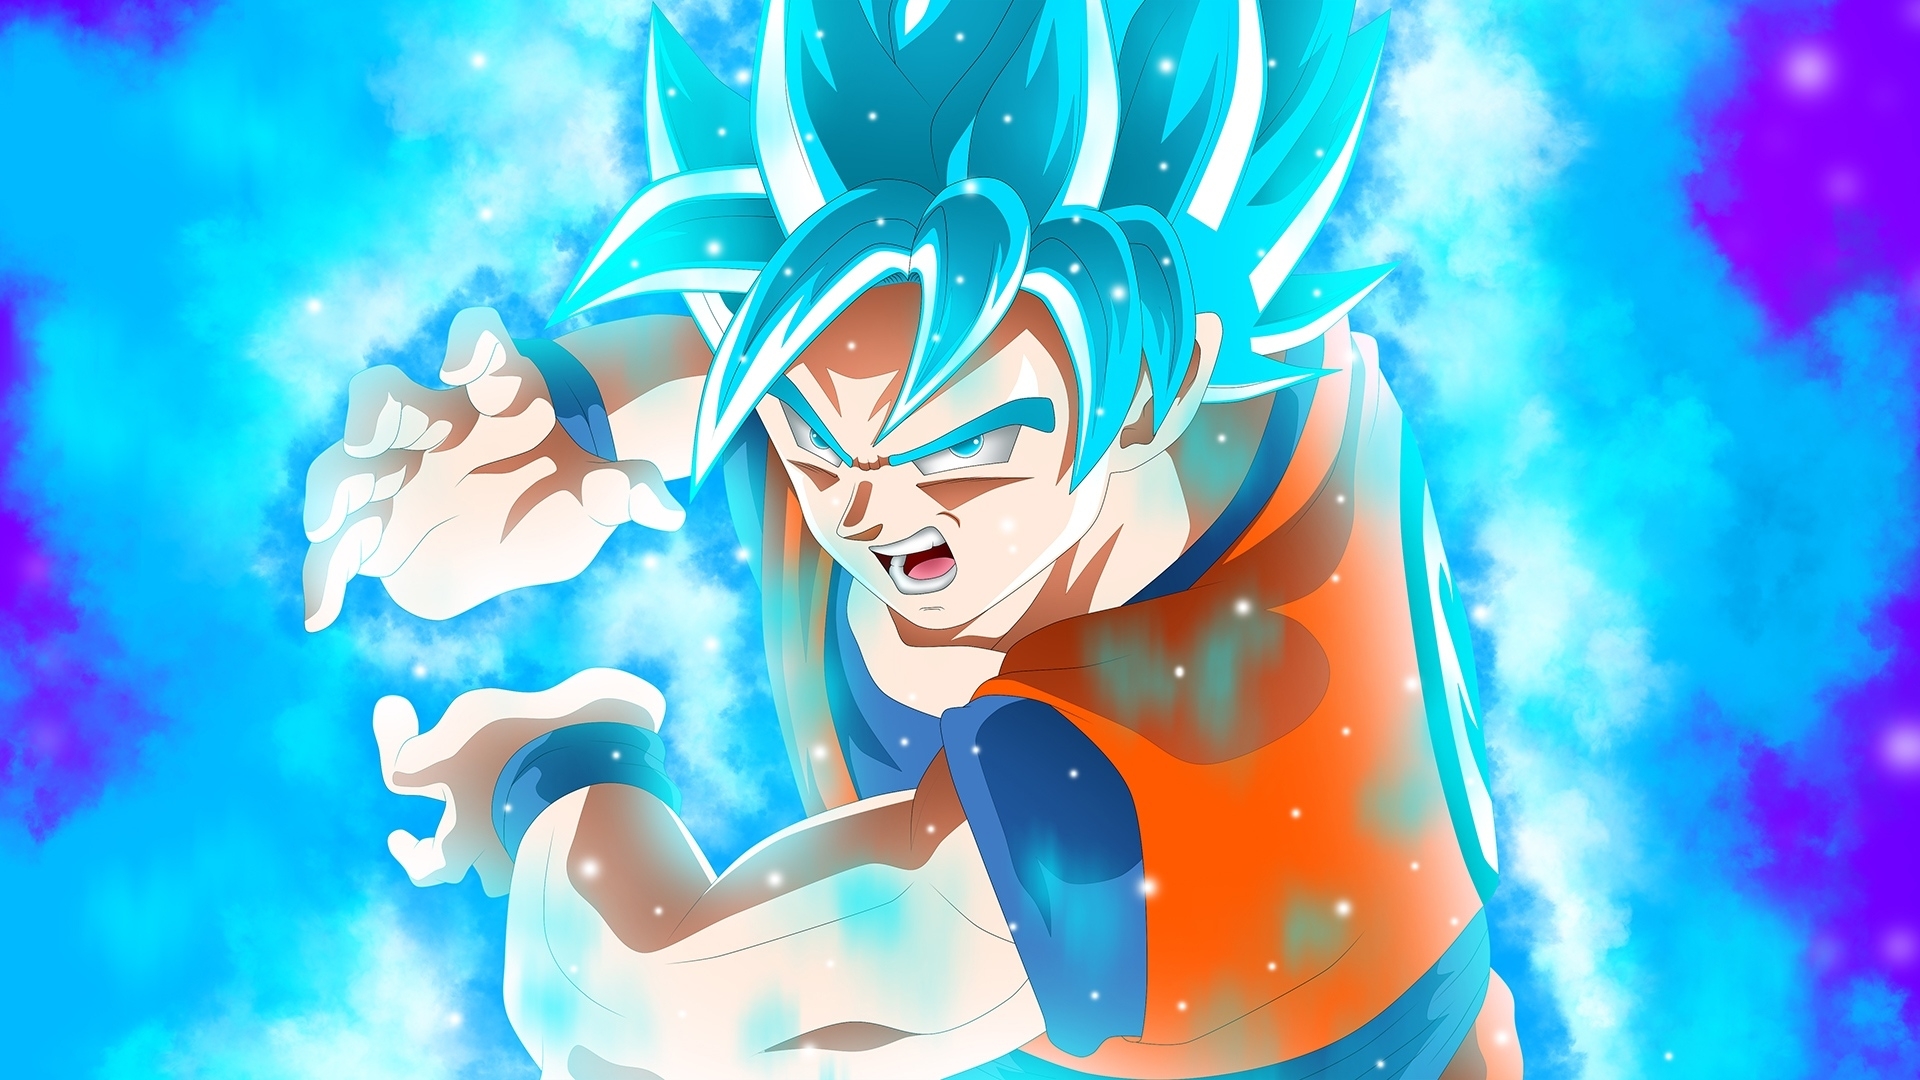 10 Best Goku Super Saiyan Blue Wallpaper Hd FULL HD 1920×1080 For PC Background 2020